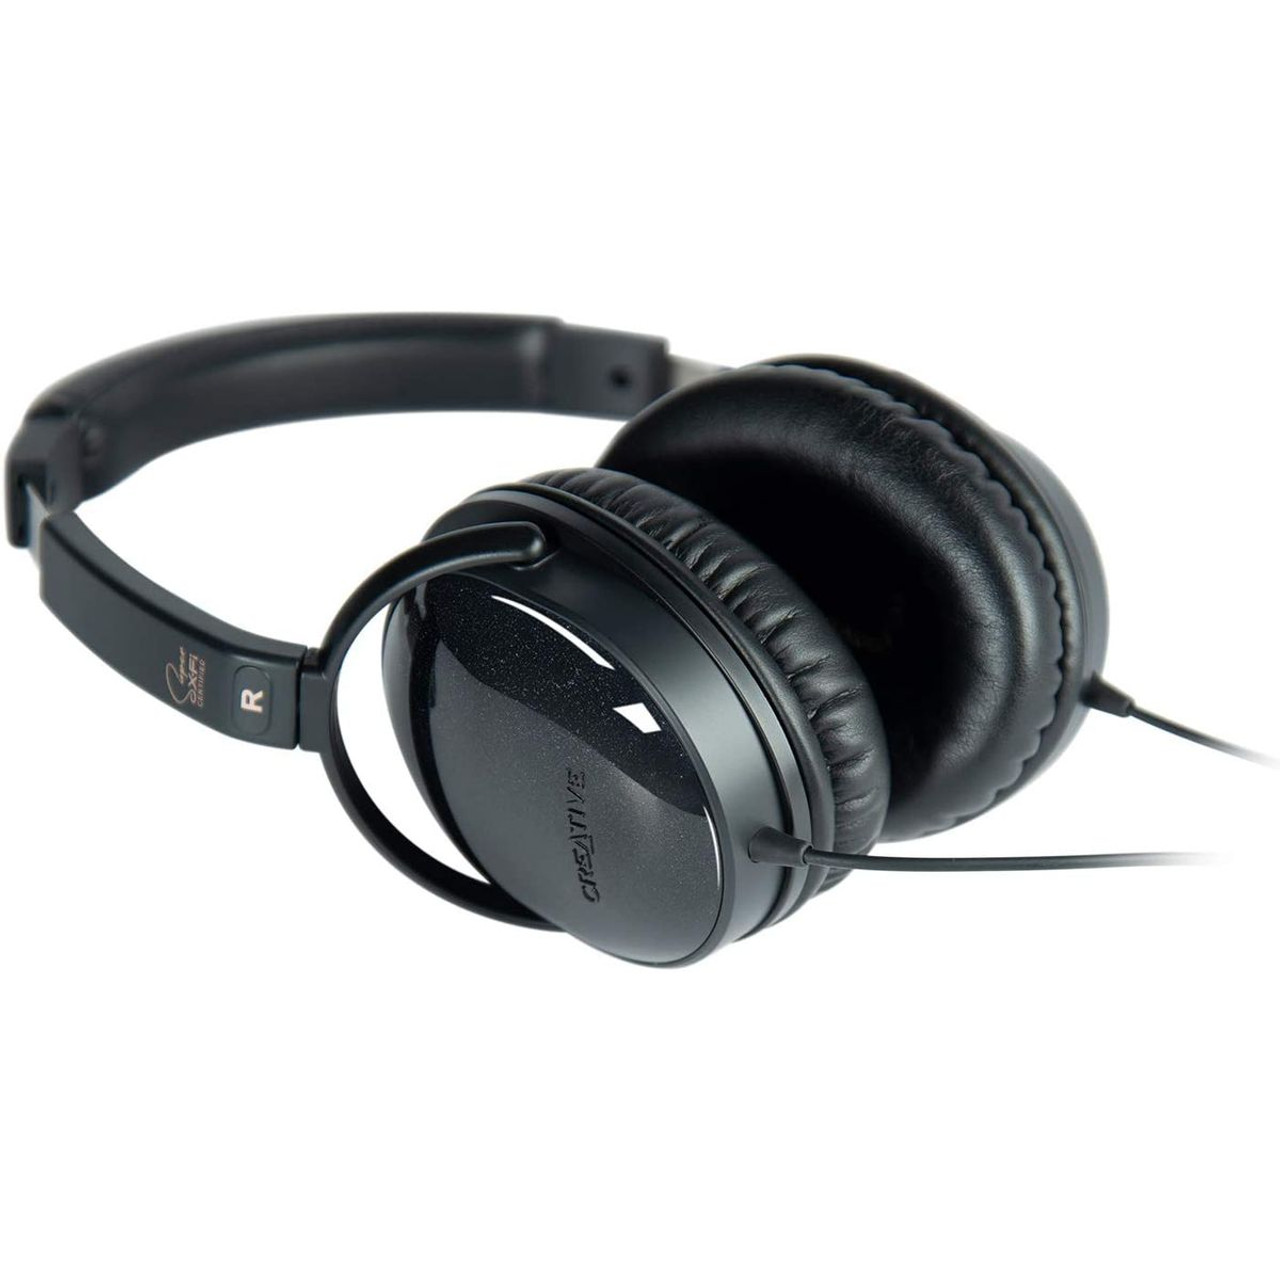 Creative Aurvana Live SE Over-Ear Headphones product image